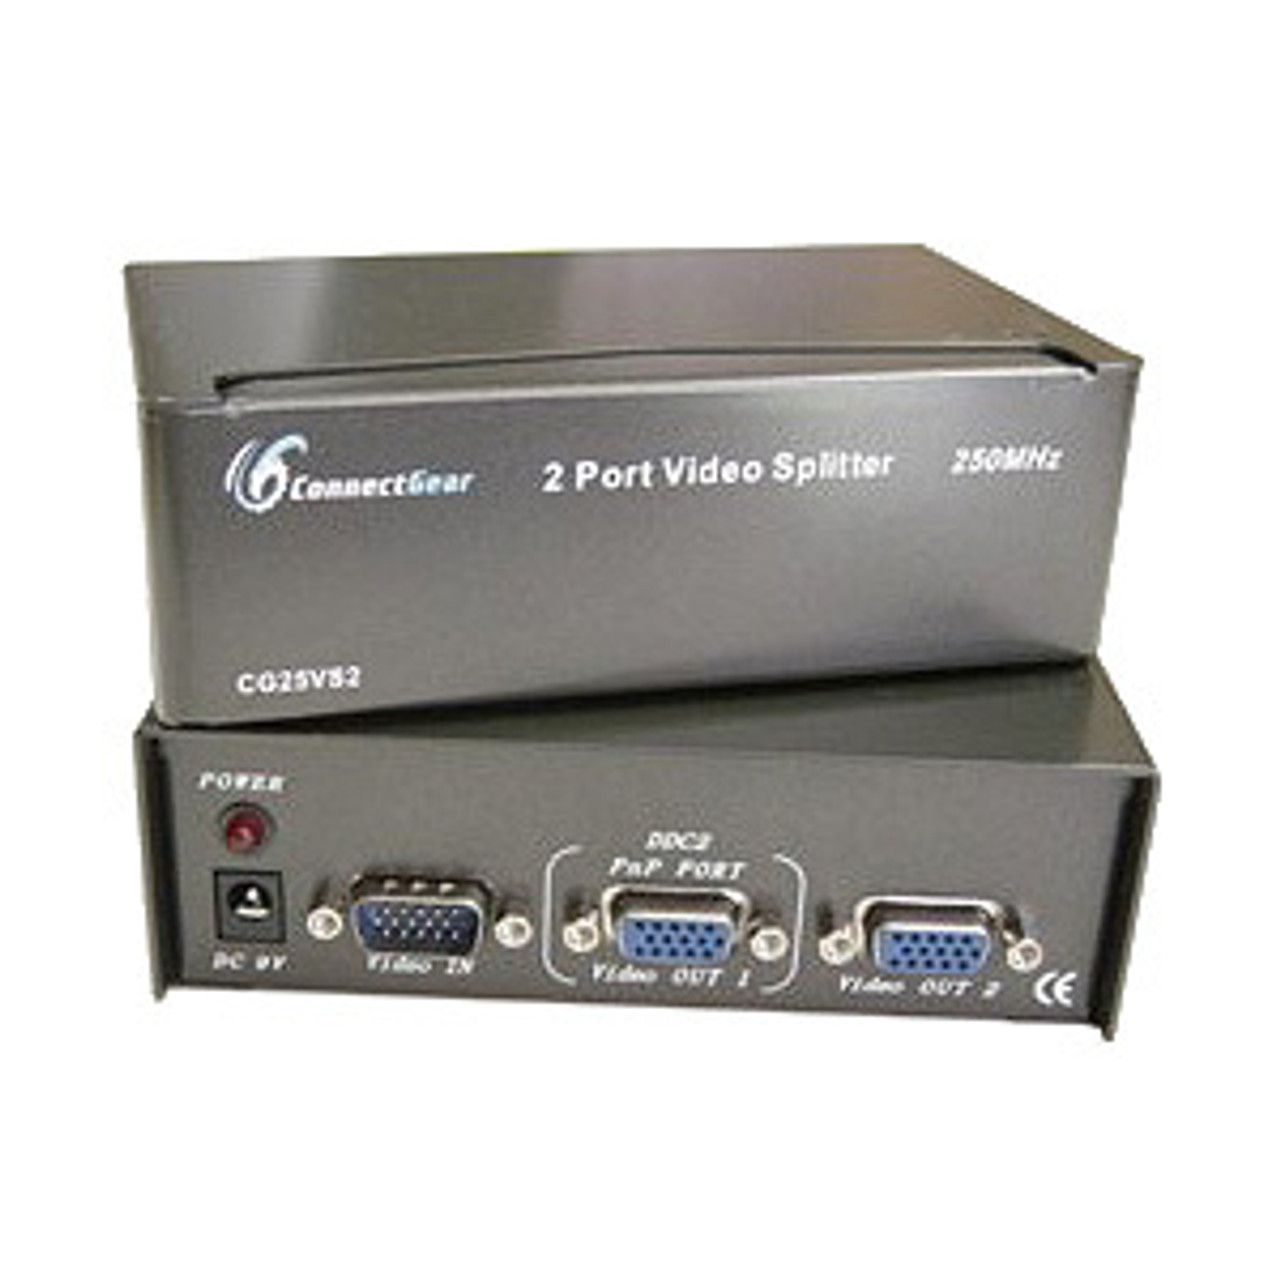 CG25VS2 Linksys 4-Port Video Signal Splitter 150MHz Up to 1600x1200 Resolution (Refurbished)